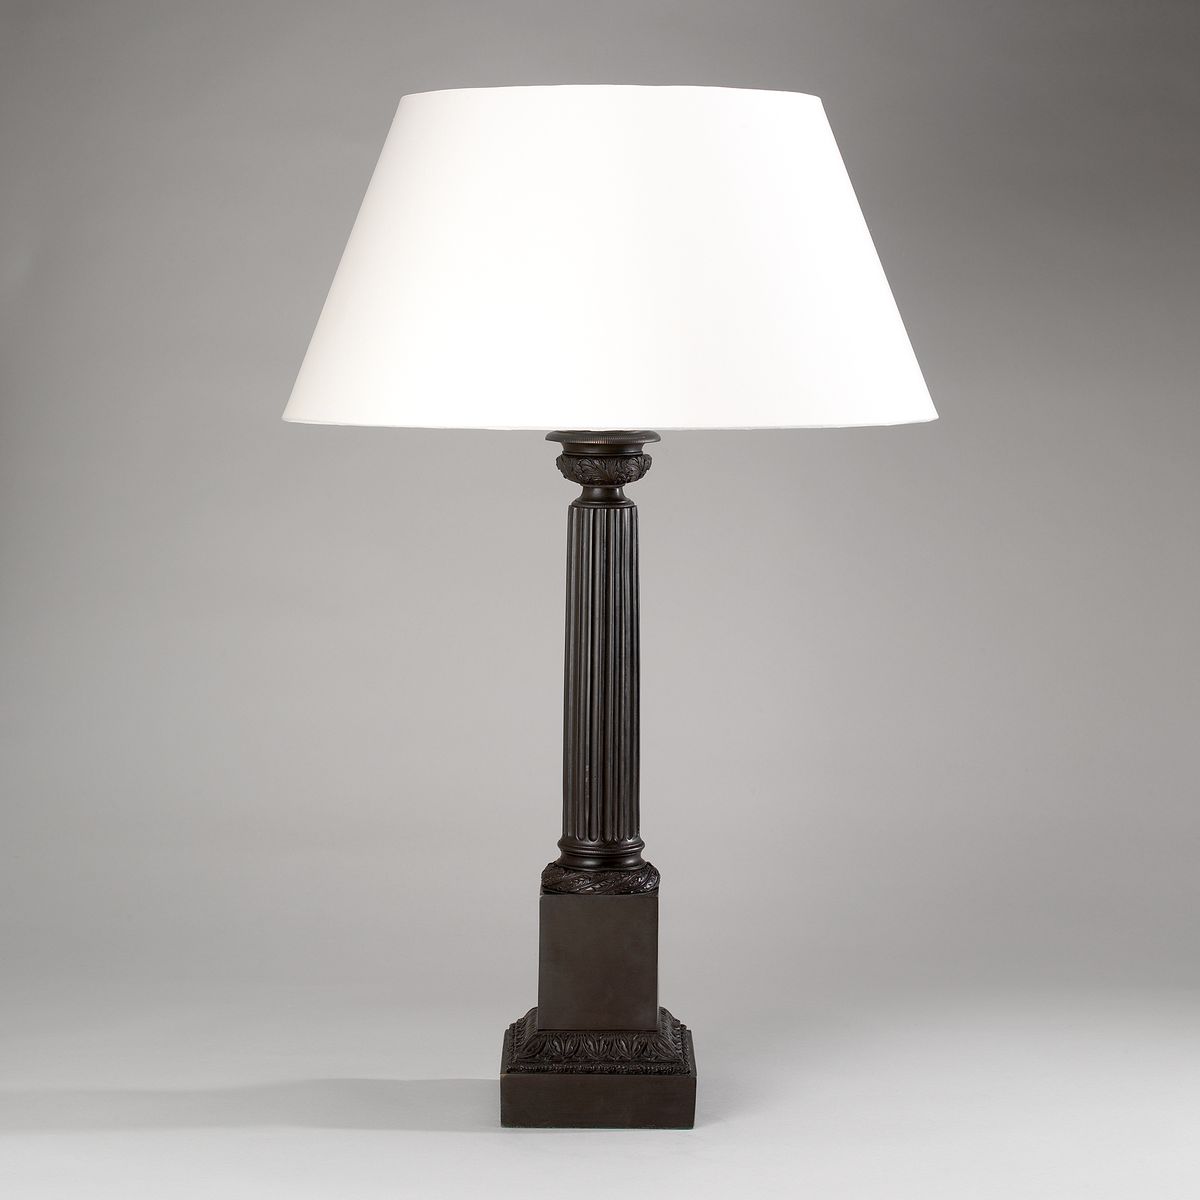 Bronze column lamp with laminated cream shade